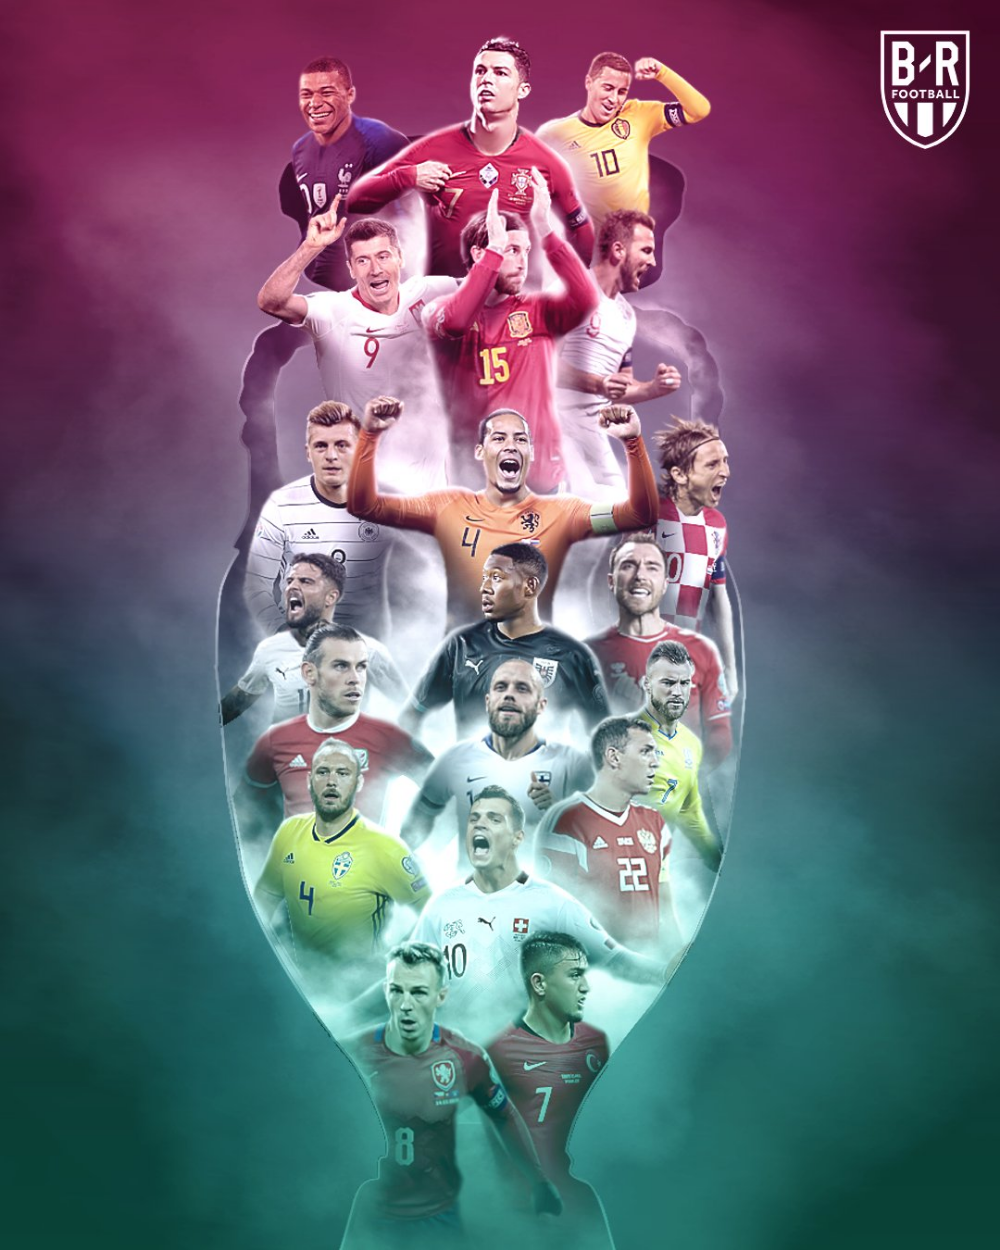 B R Football On Twitter. Football Wallpaper, Messi And Ronaldo, 2020 Poster